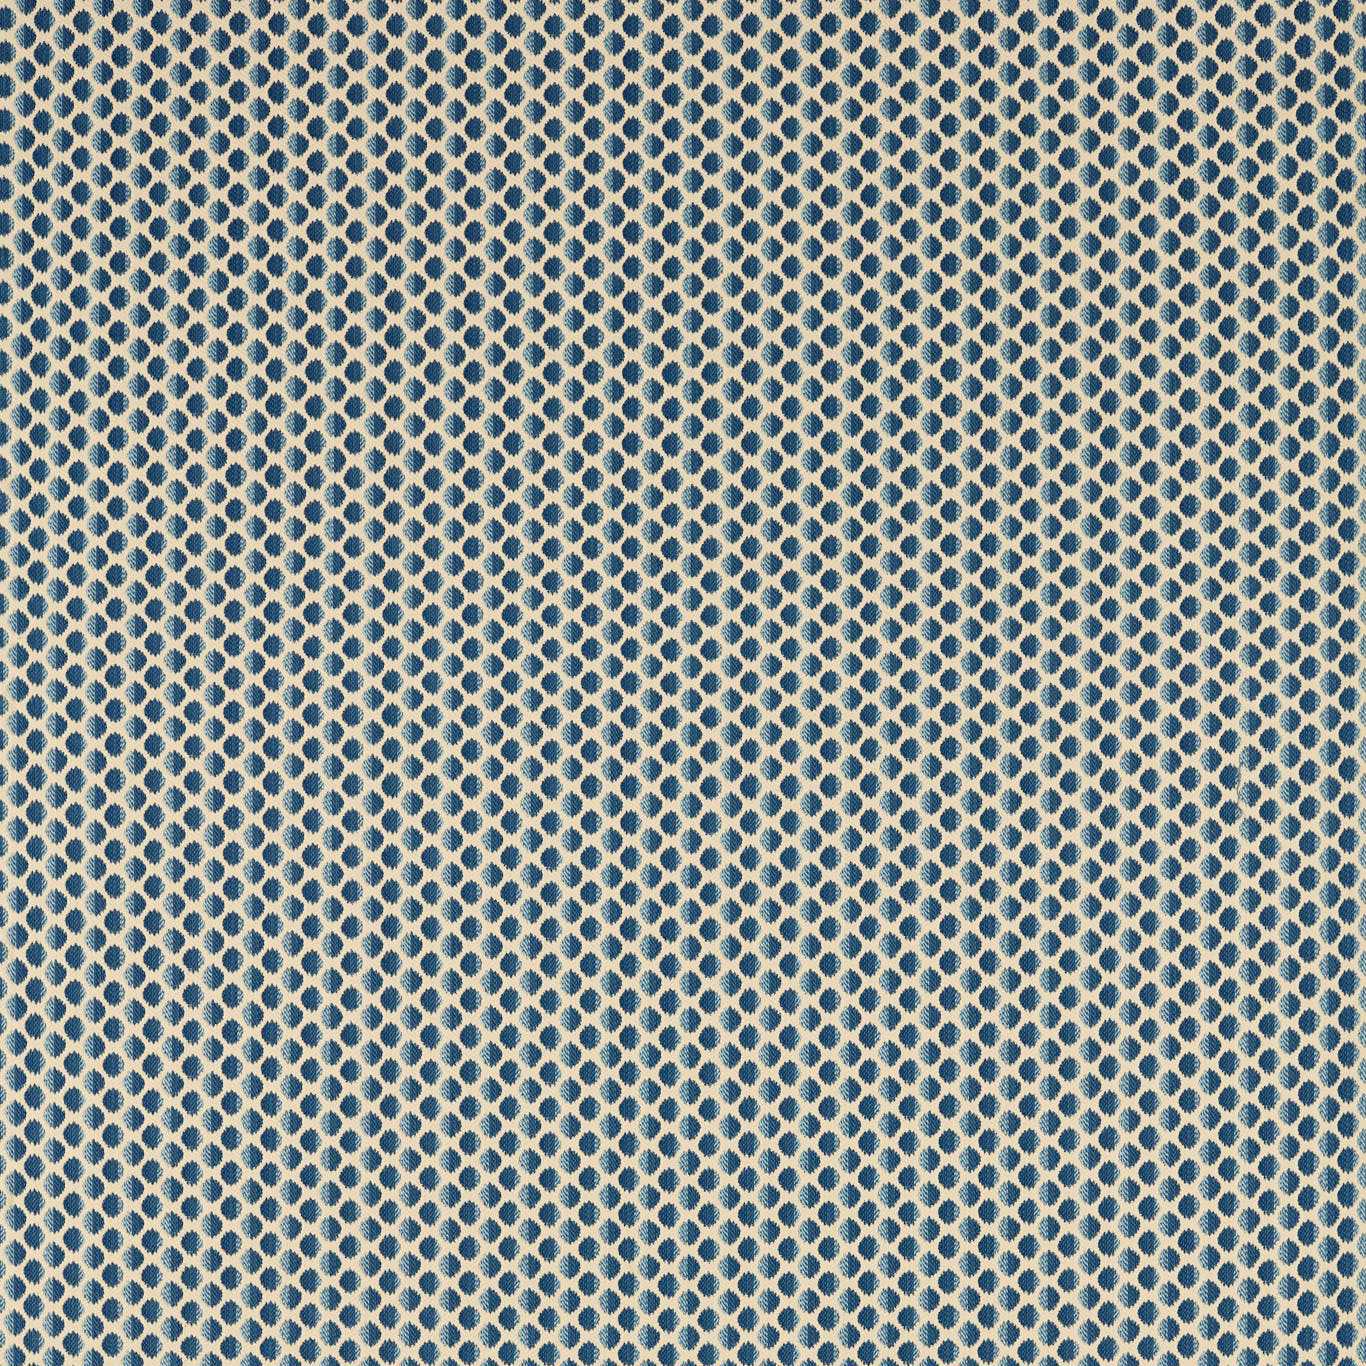 Seymour Spot Indigo Fabric by ZOF